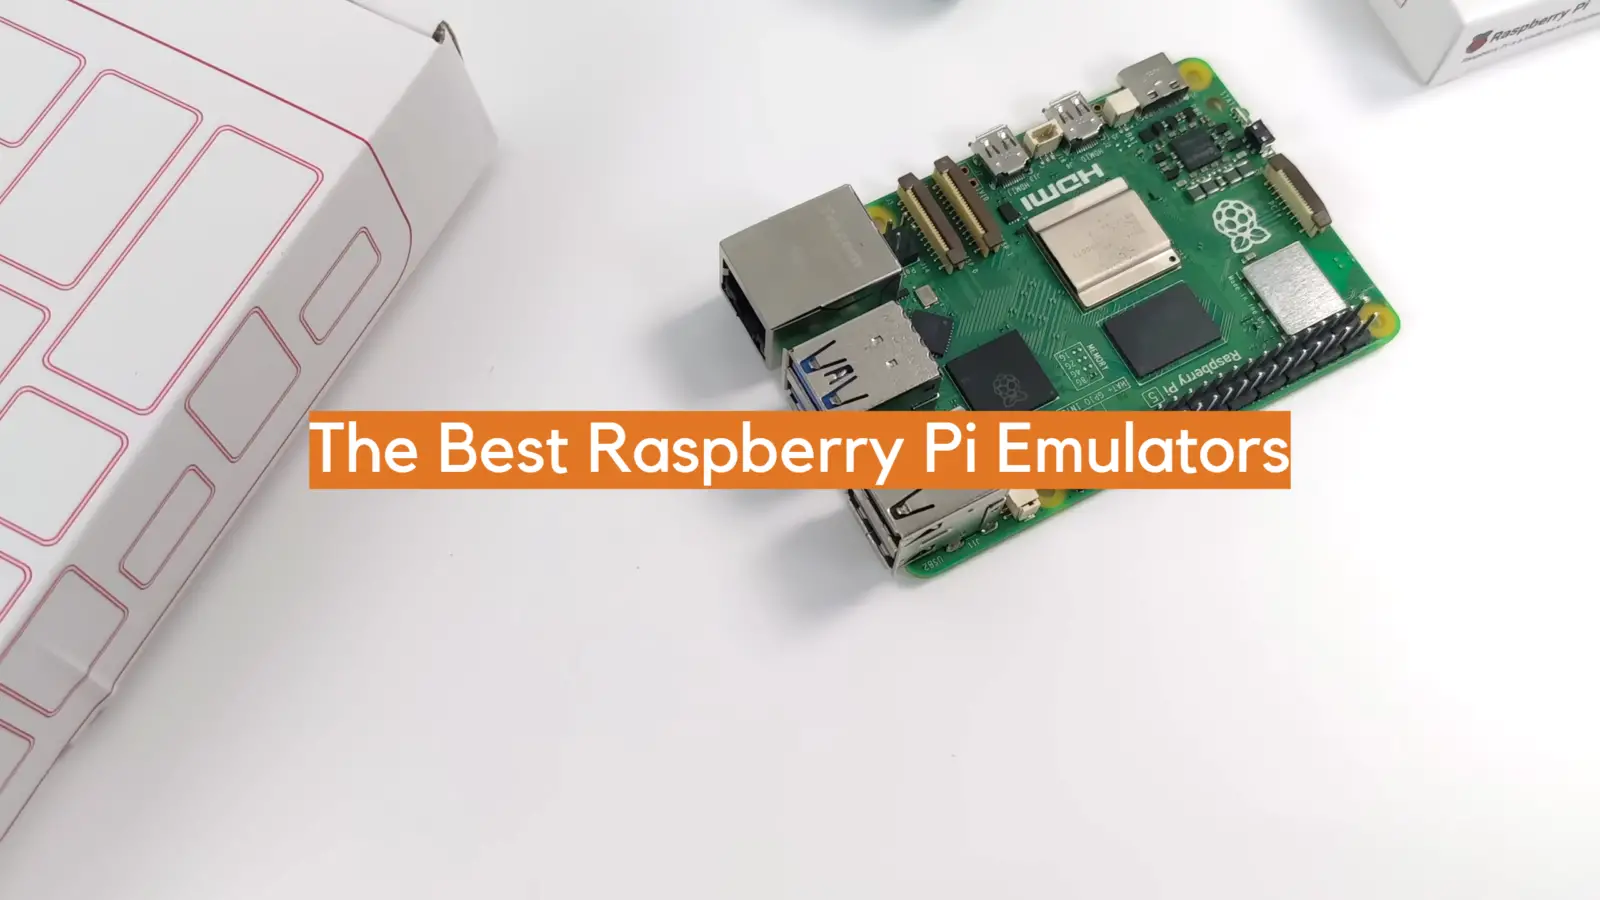 The Best Raspberry Pi Emulators